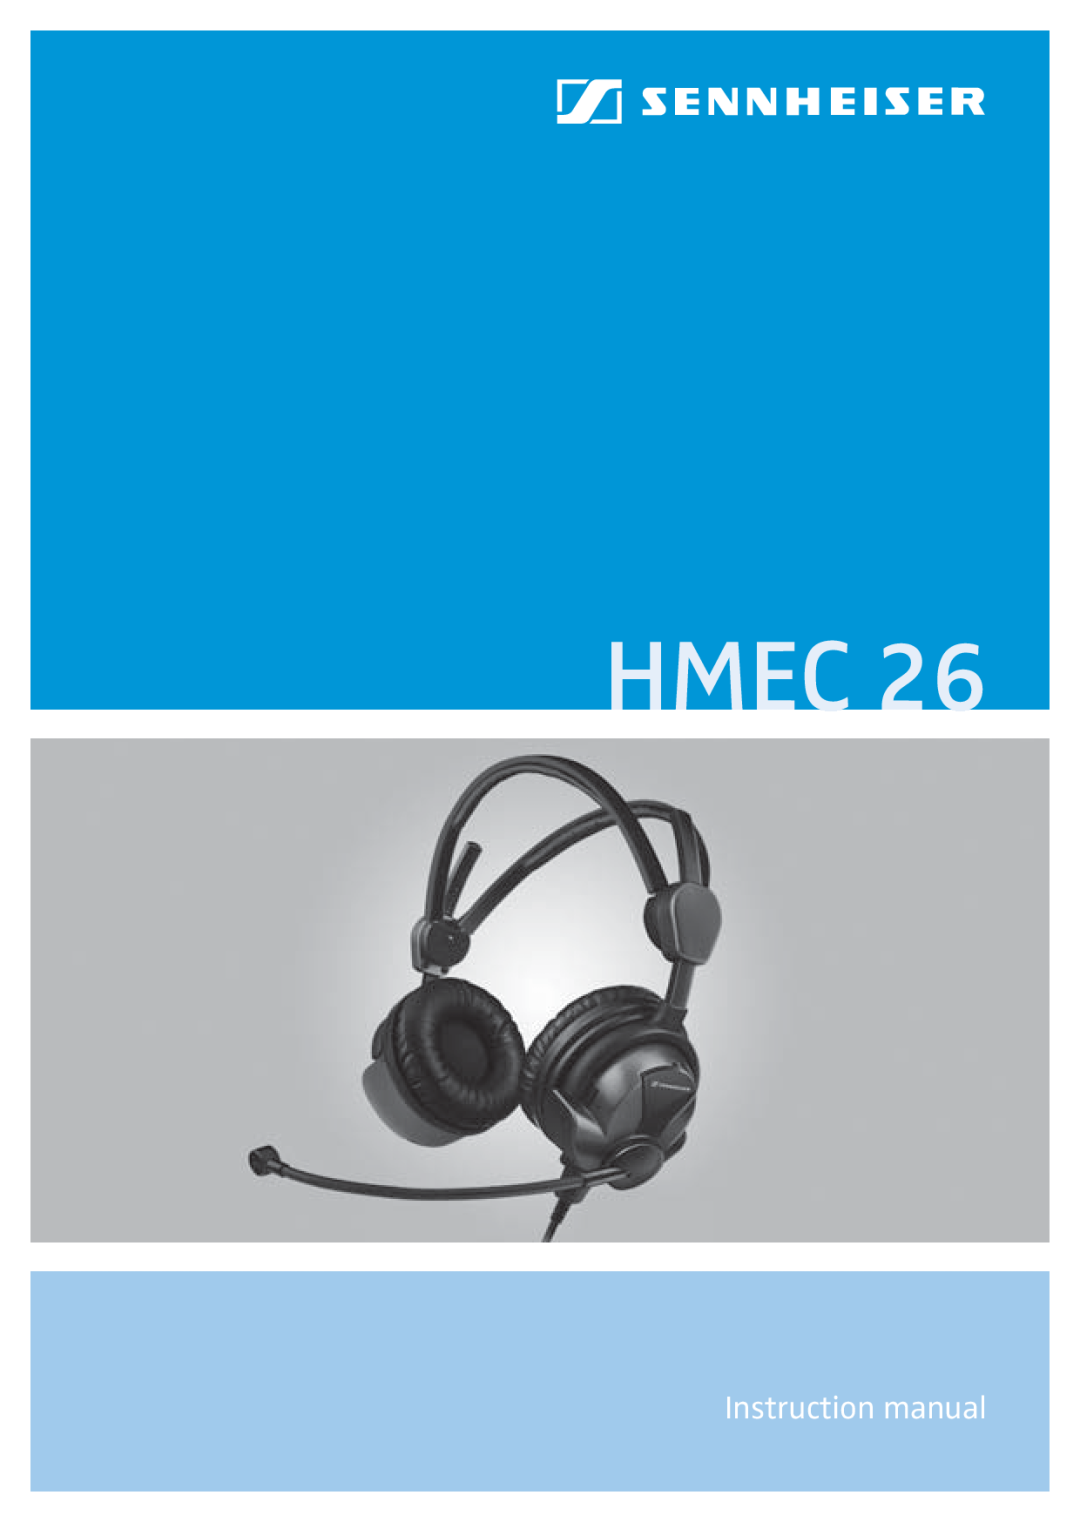 Sennheiser 523983/A01, HMEC 26, 502399 instruction manual Hmec 